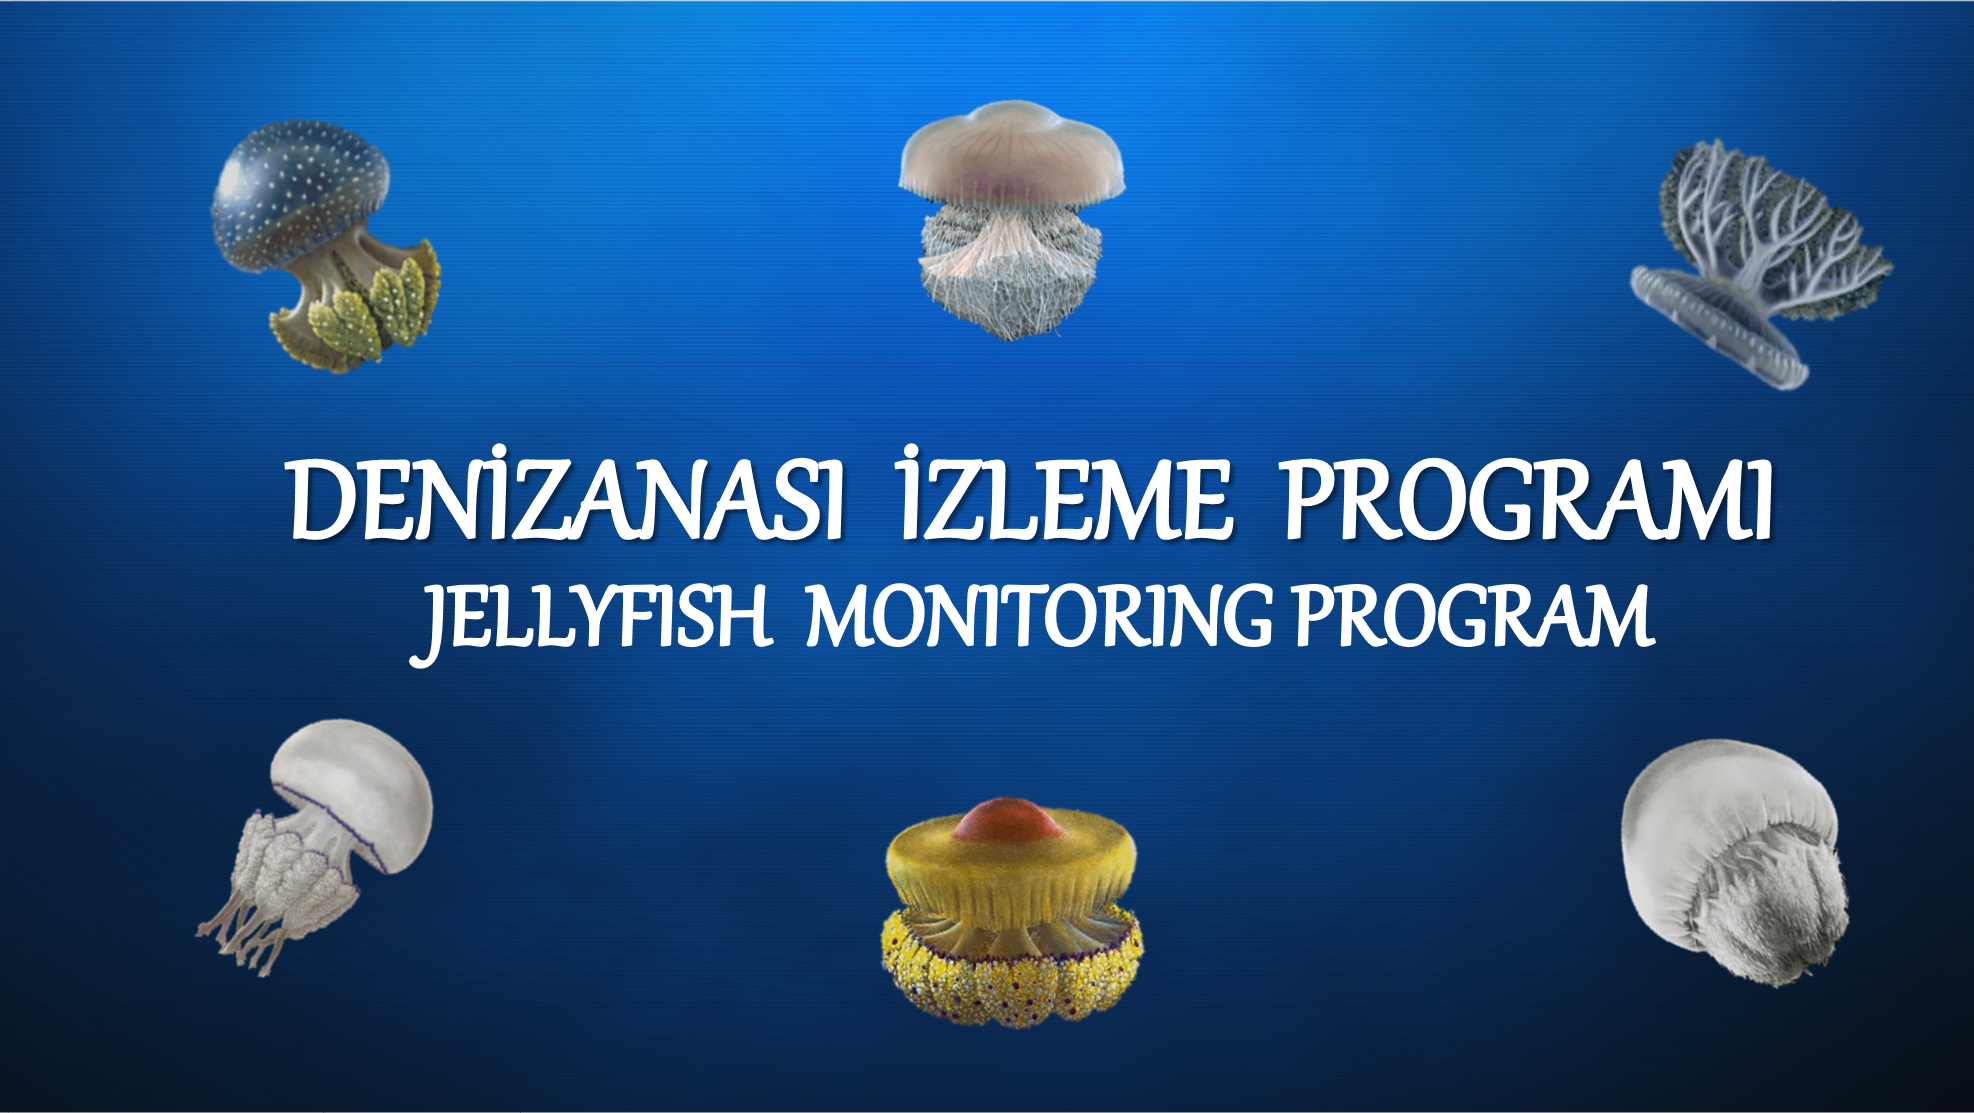 Denizanası İzleme Programı / Jellyfısh Monitoring Program of Turkey